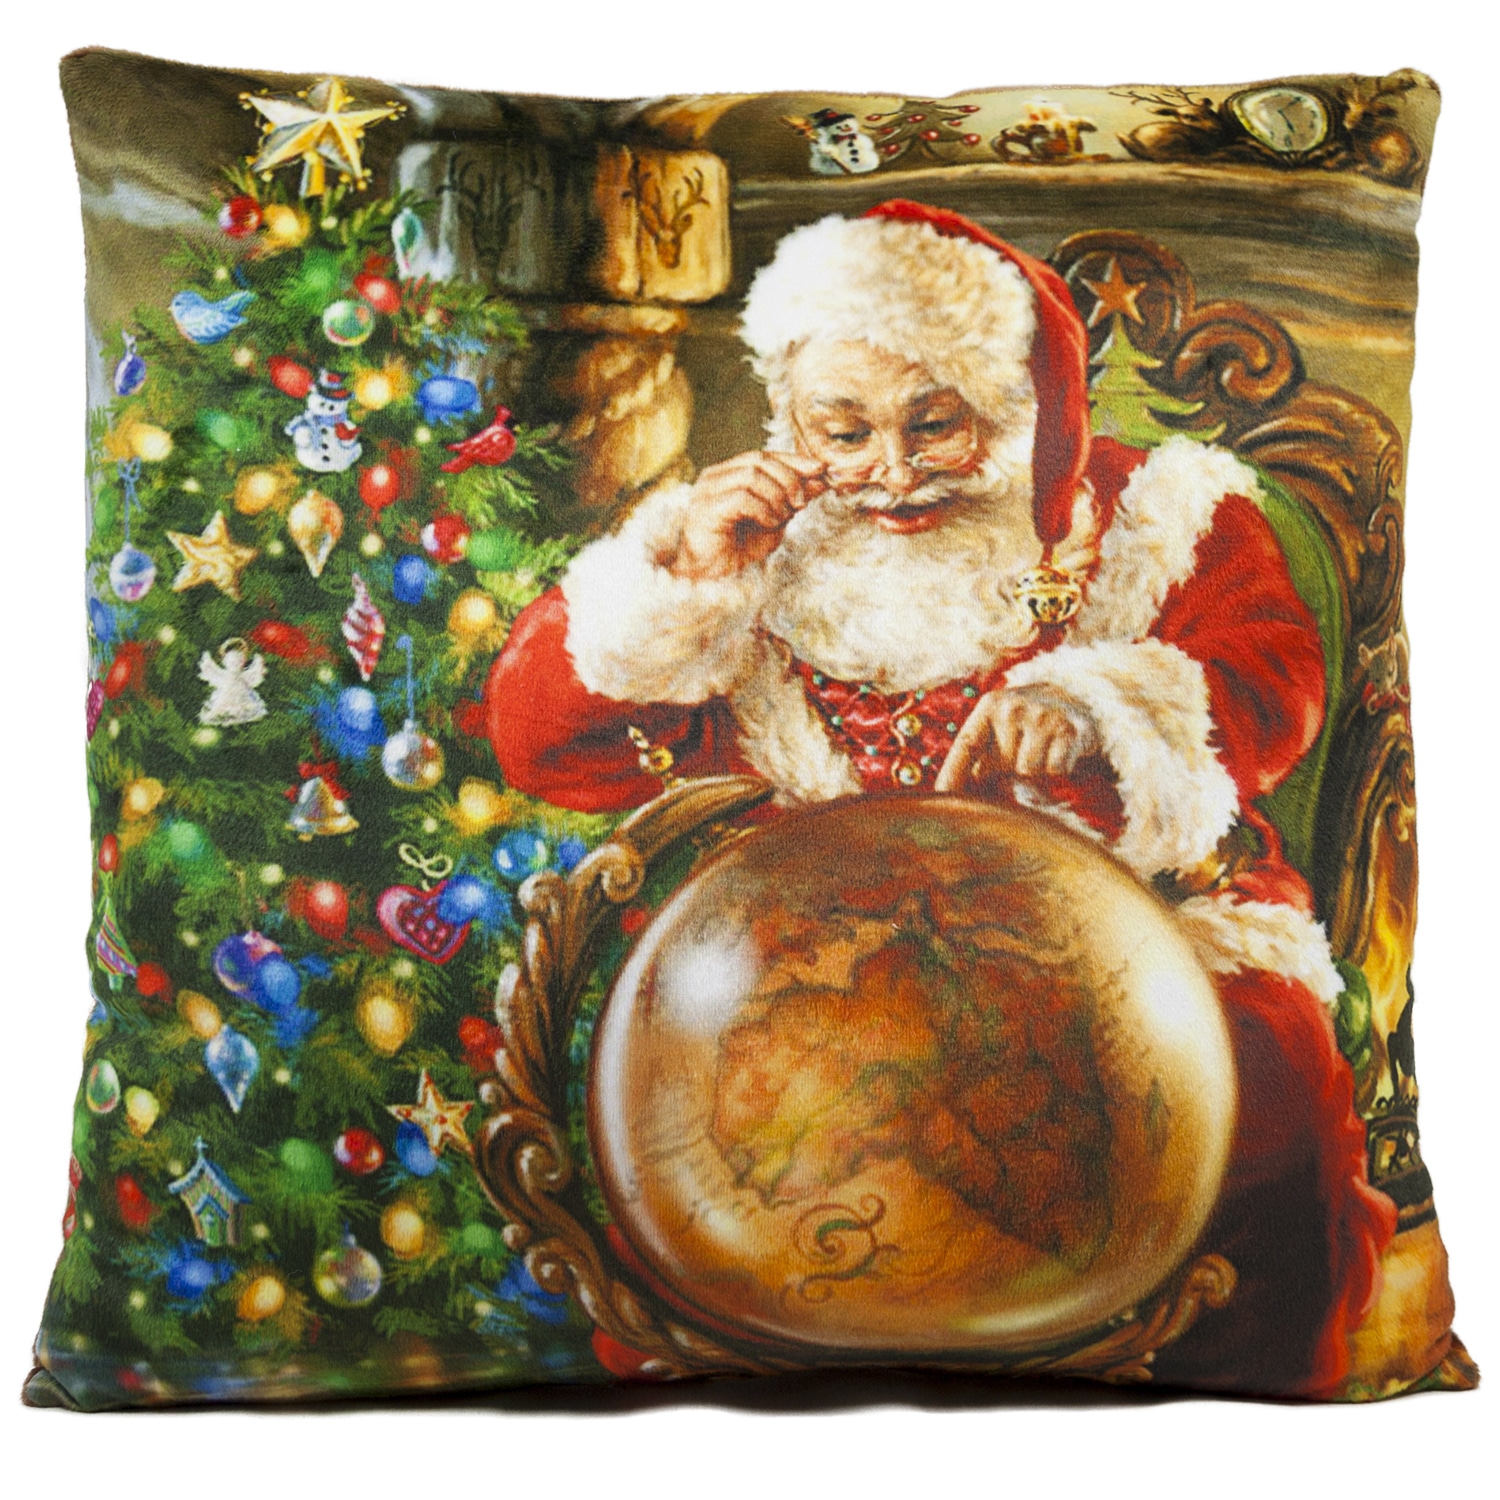 Christmas pillow - Santa Claus with a globe